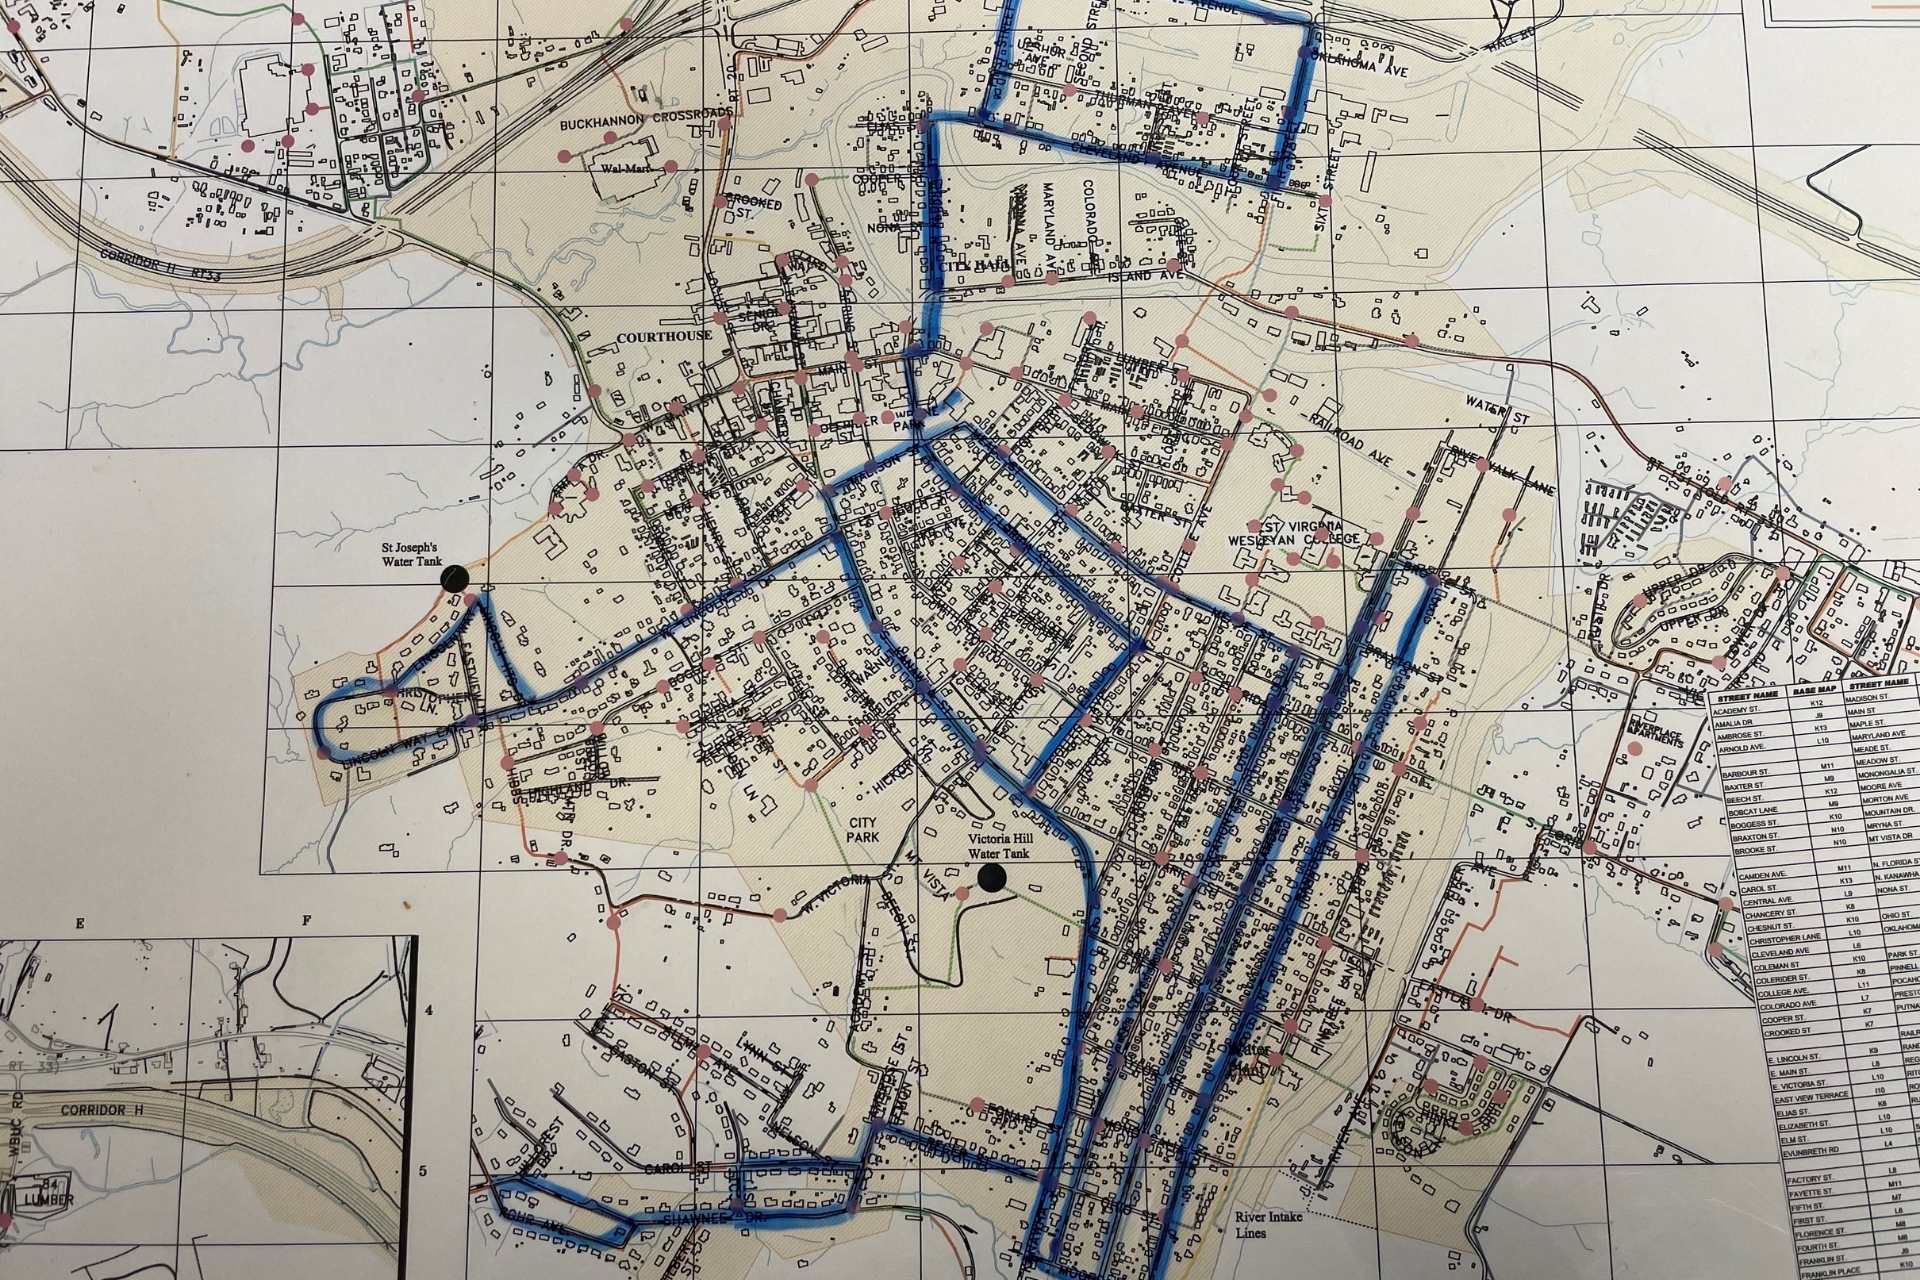 Santa's Route Map (courtesy the City of Buckhannon)